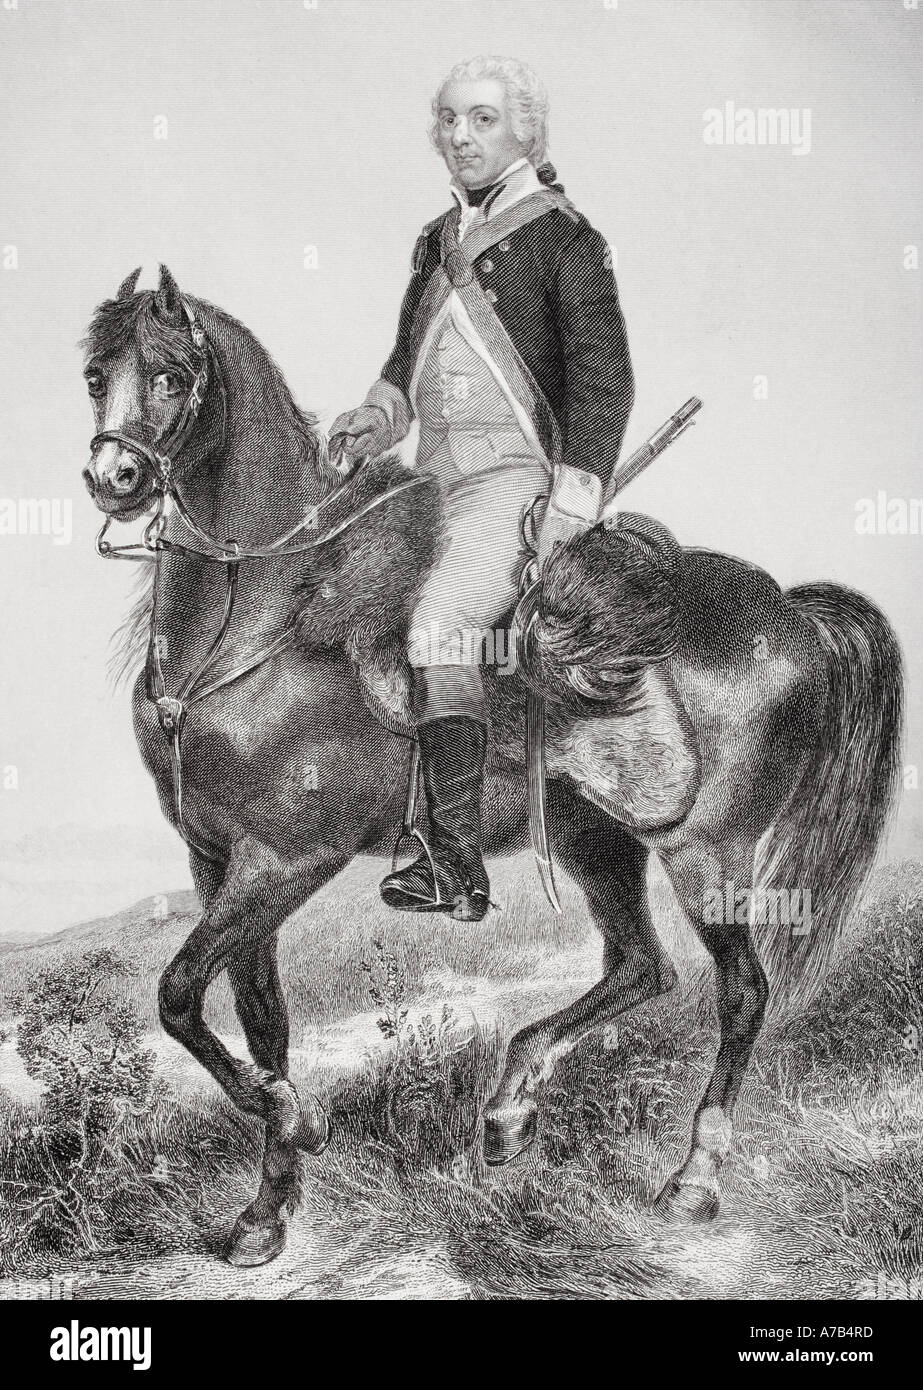 Generalmajor Henry'Light-Horse Harry" Lee III, 1756 - 1818. Kavallerie Offizier in der amerikanischen Revolution. Der Vater von Robert E. Lee. Stockfoto